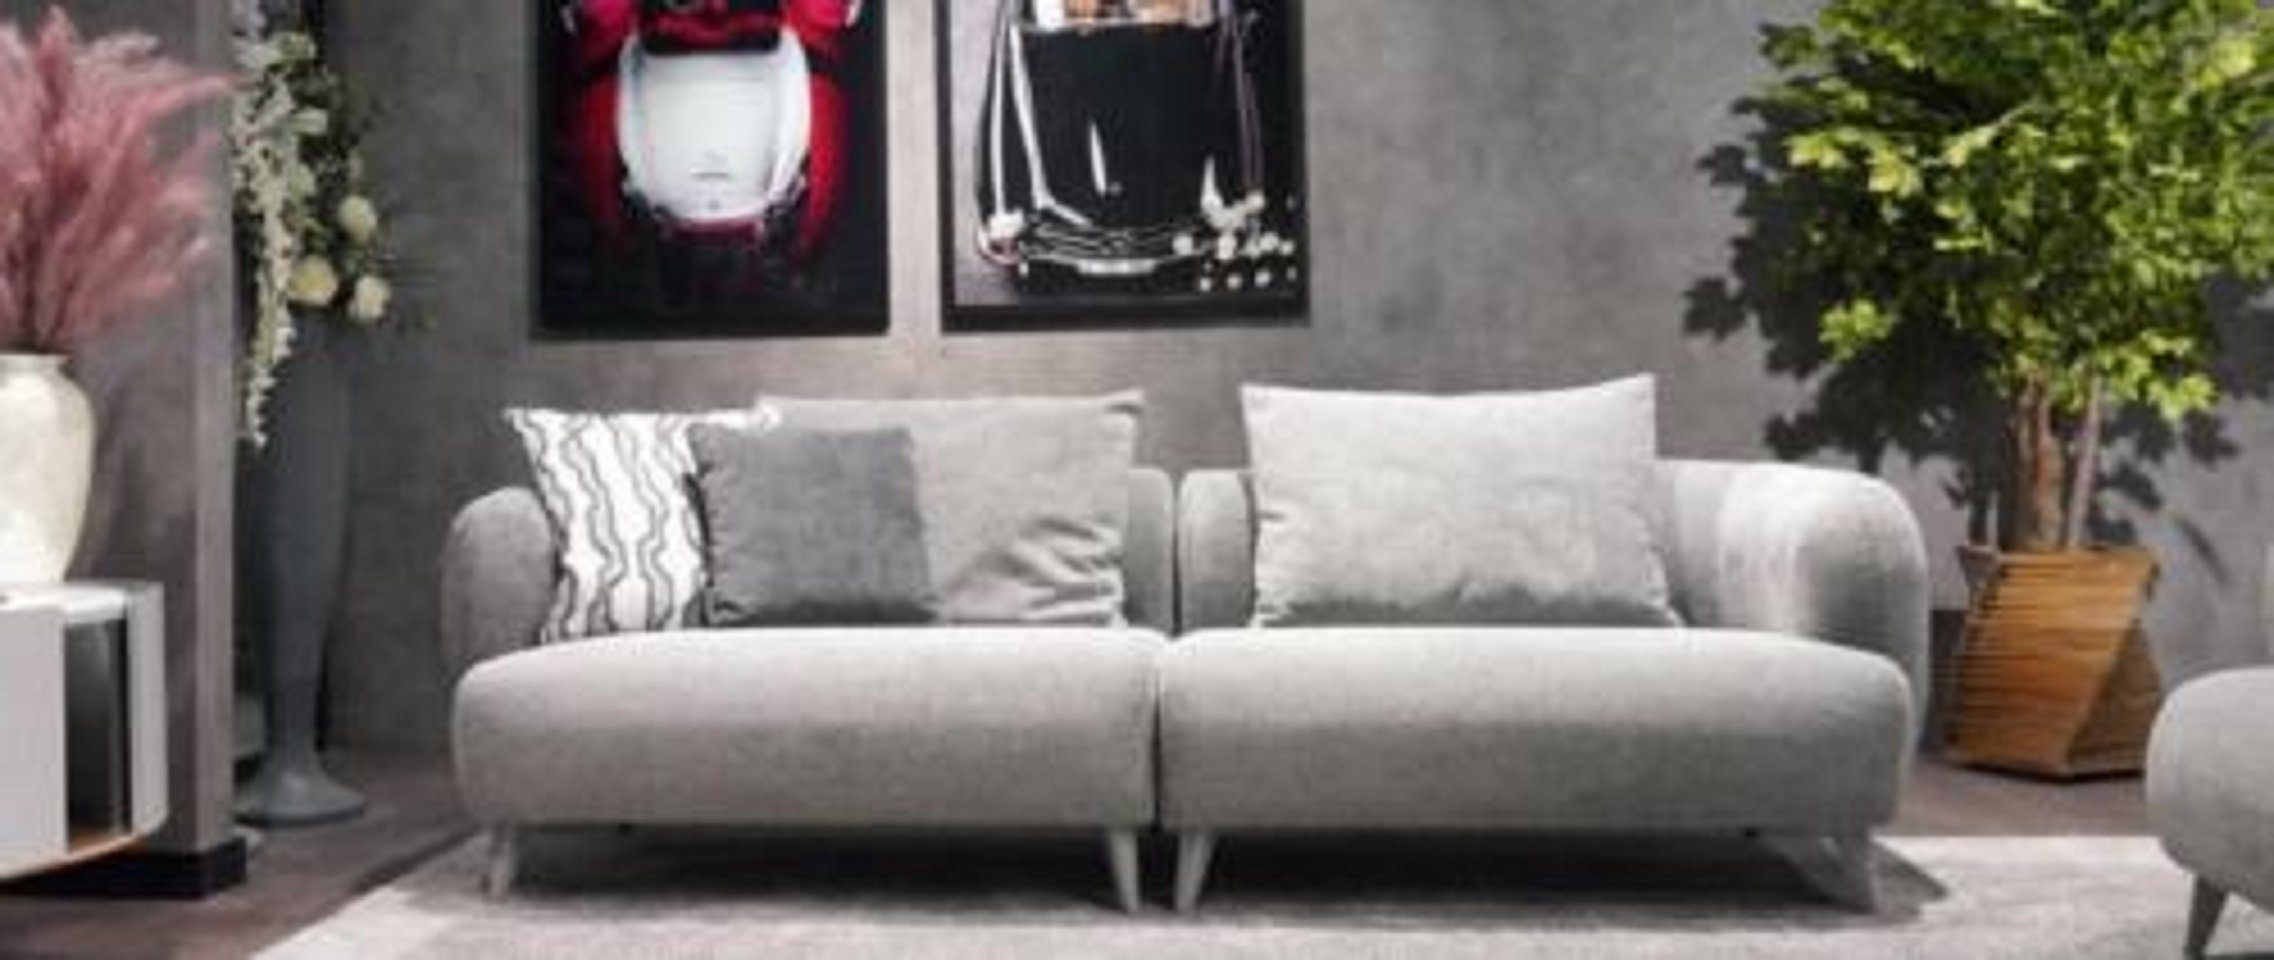 JVmoebel 3-Sitzer Luxus Sofa 3 Sitzer Design Grau Sofa Polster Textil Big xxl, 1 Teile, Made in Europe